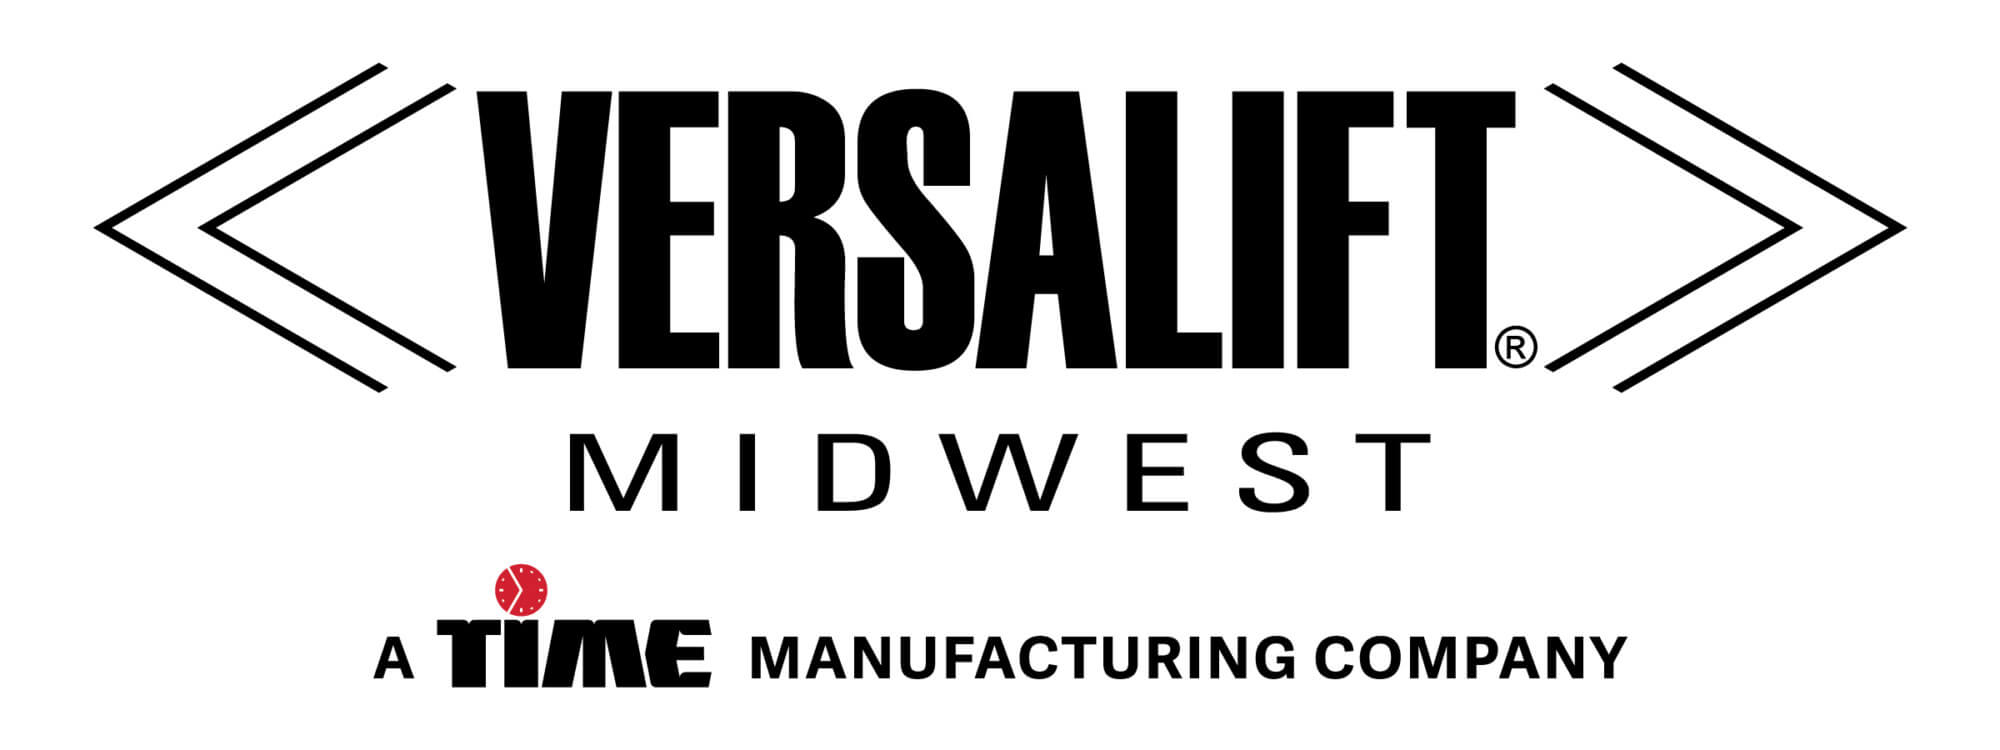 Versalift Midwest With Tagline Logo ® 2019